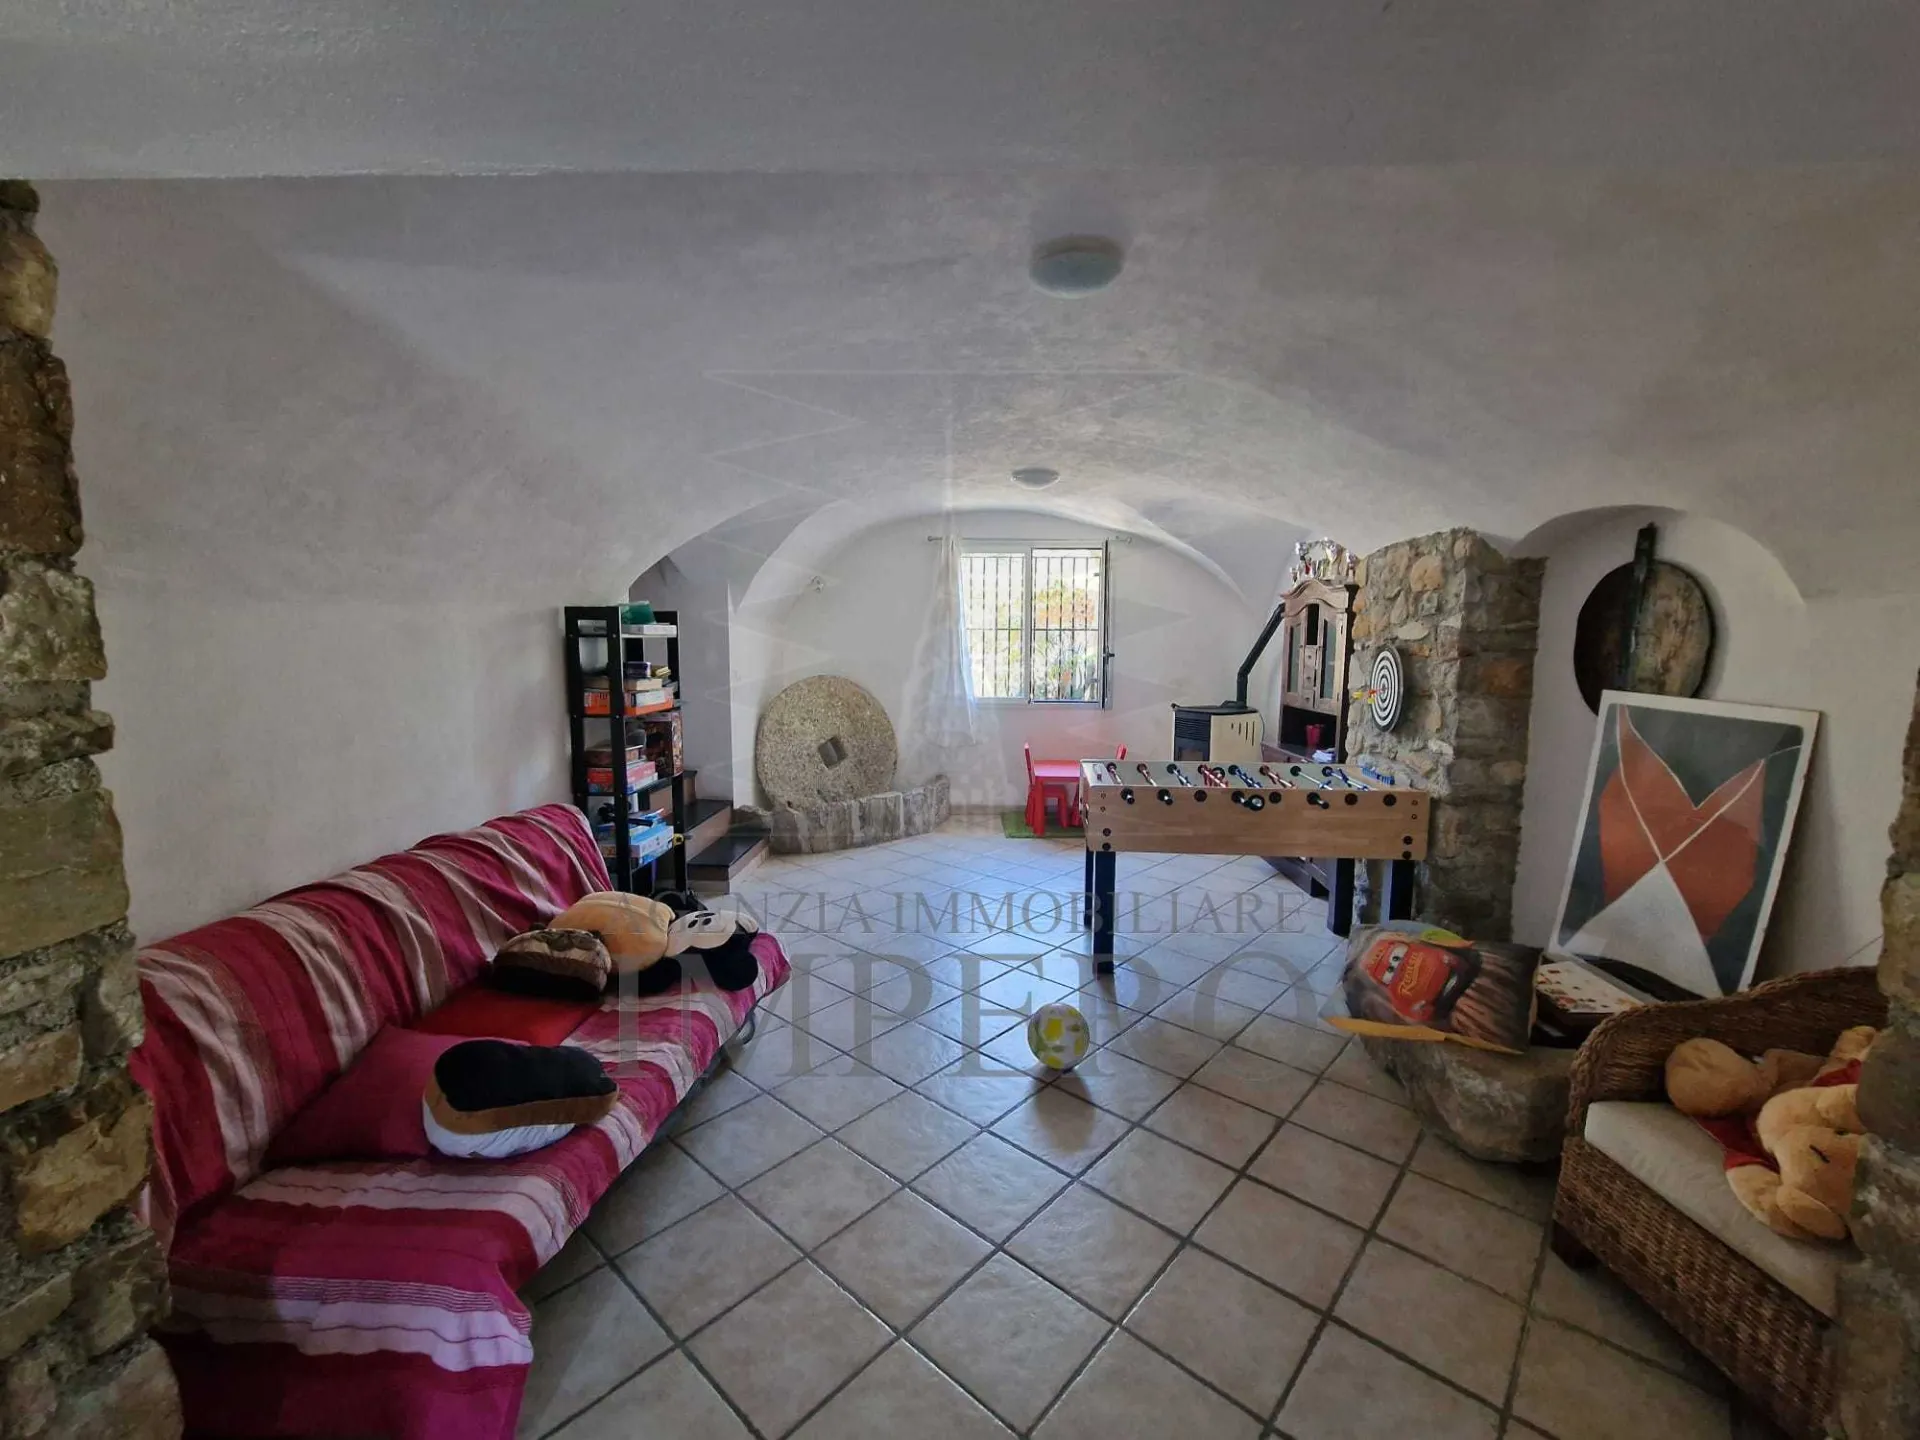 Immagine per Porzione di casa in vendita a Ventimiglia via Frazione Varase 27